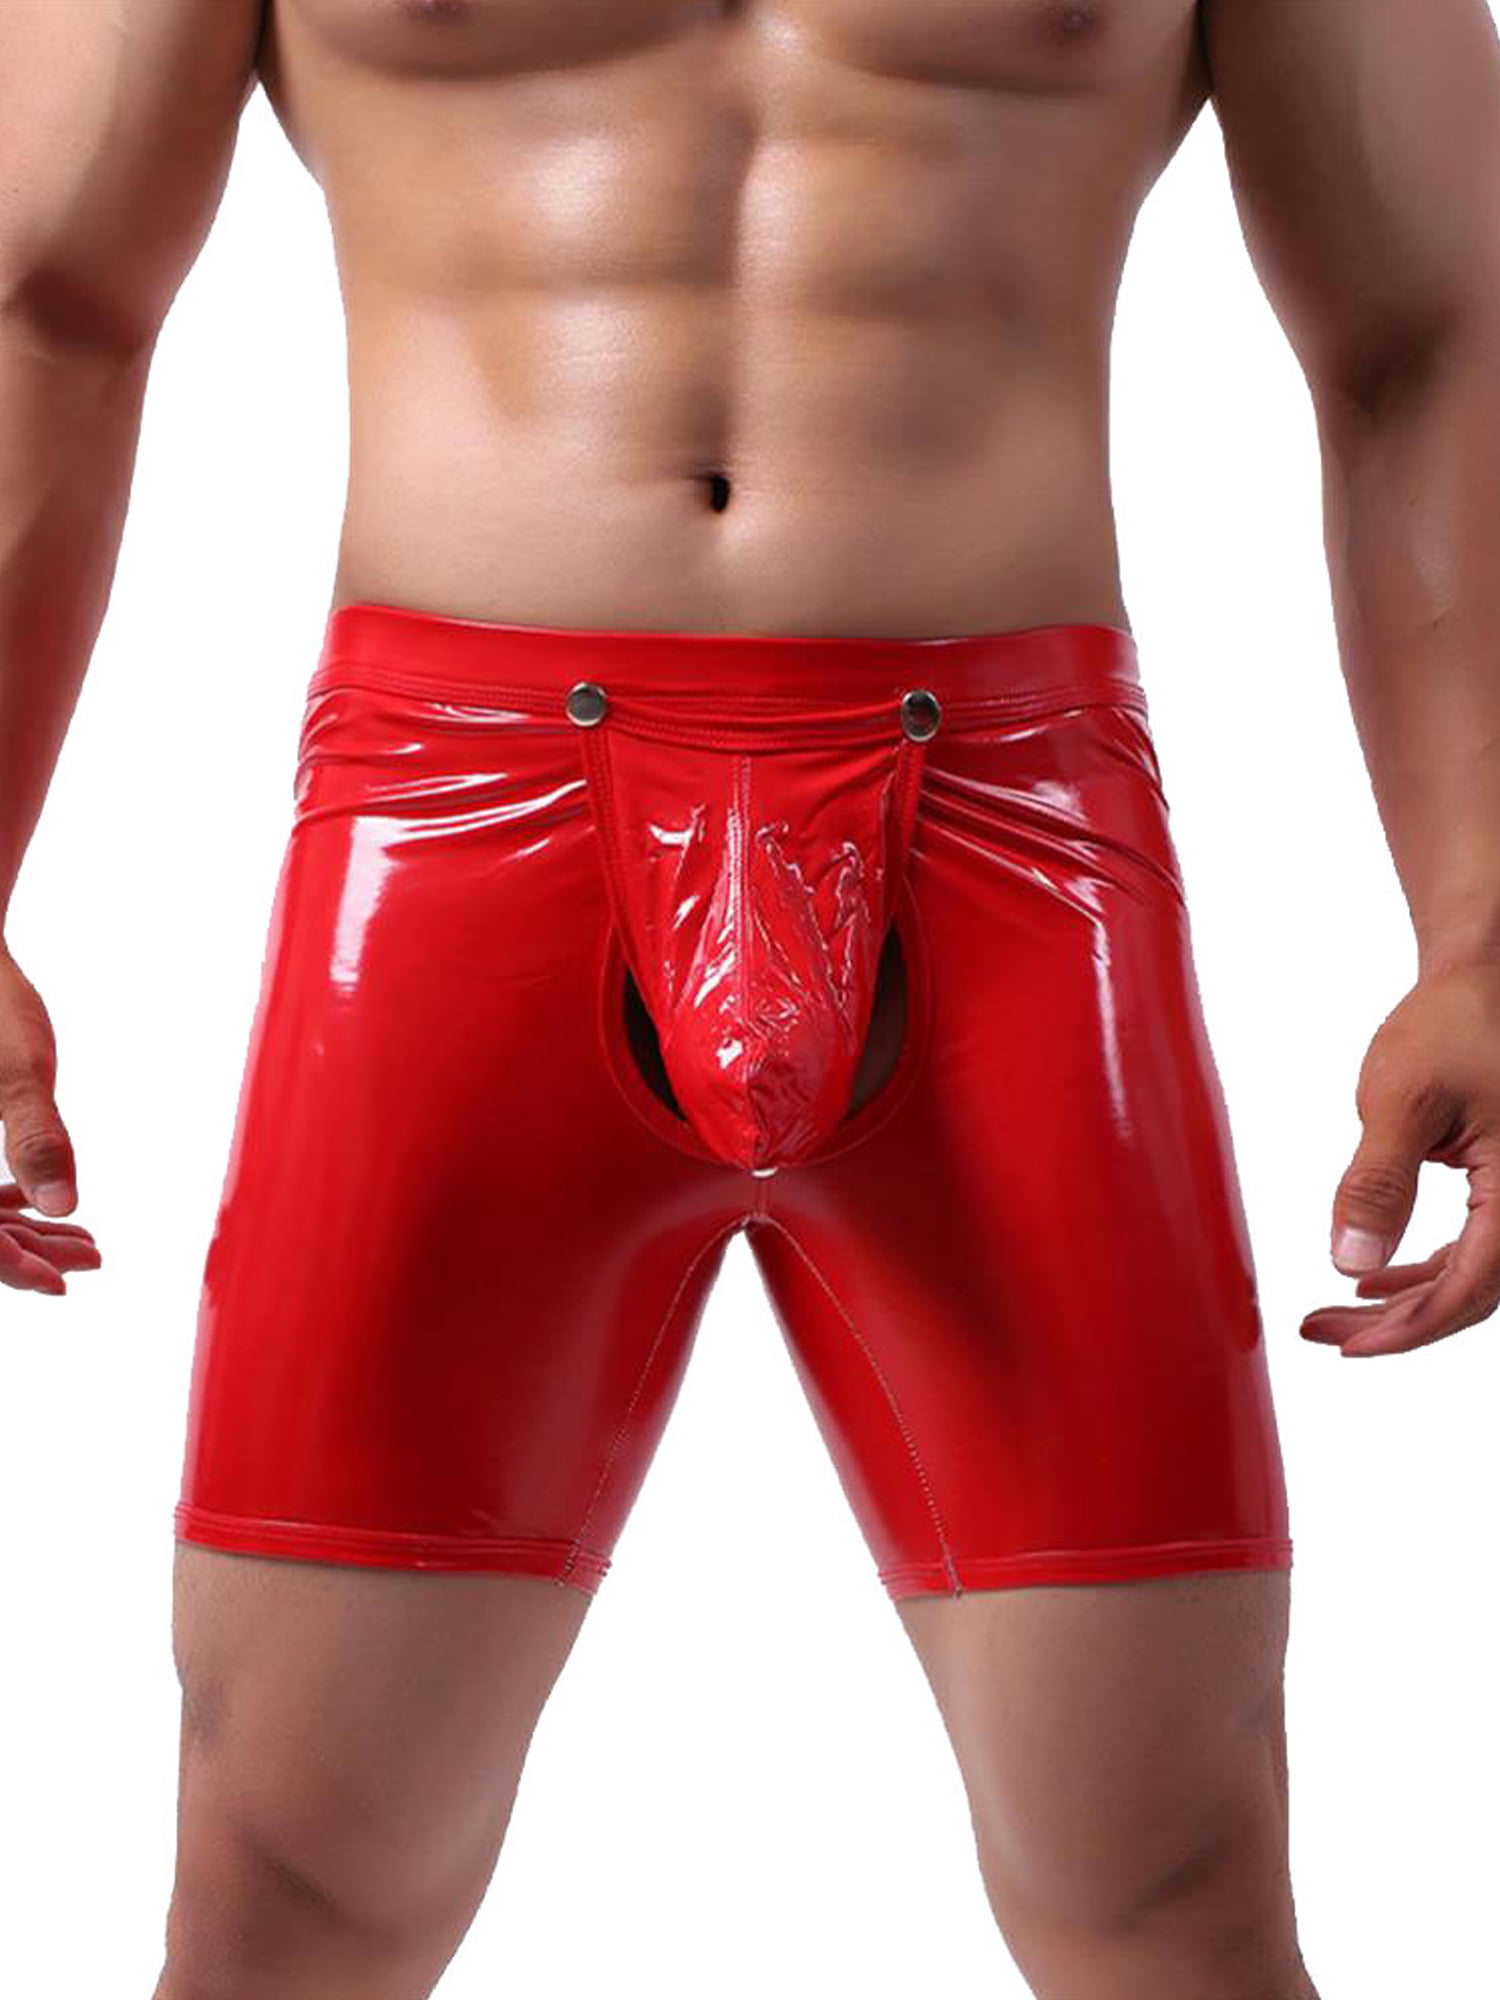 Eleluny Men Faux Leather Briefs Boxer Panties Shorts Look Wet